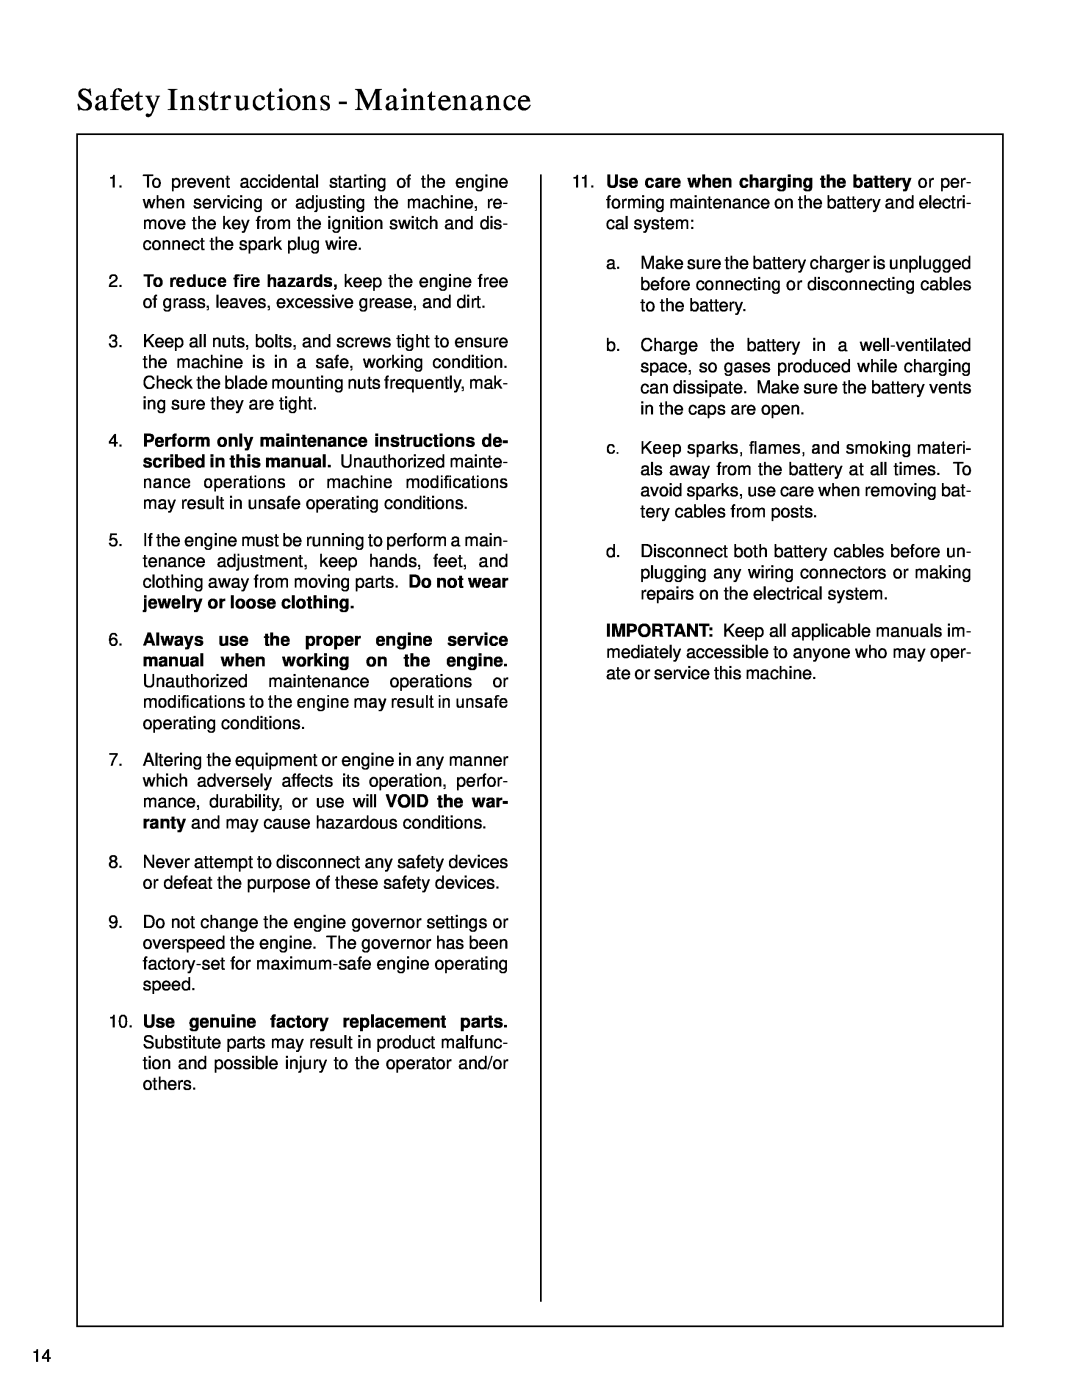 Walker S14 manual Safety Instructions - Maintenance 